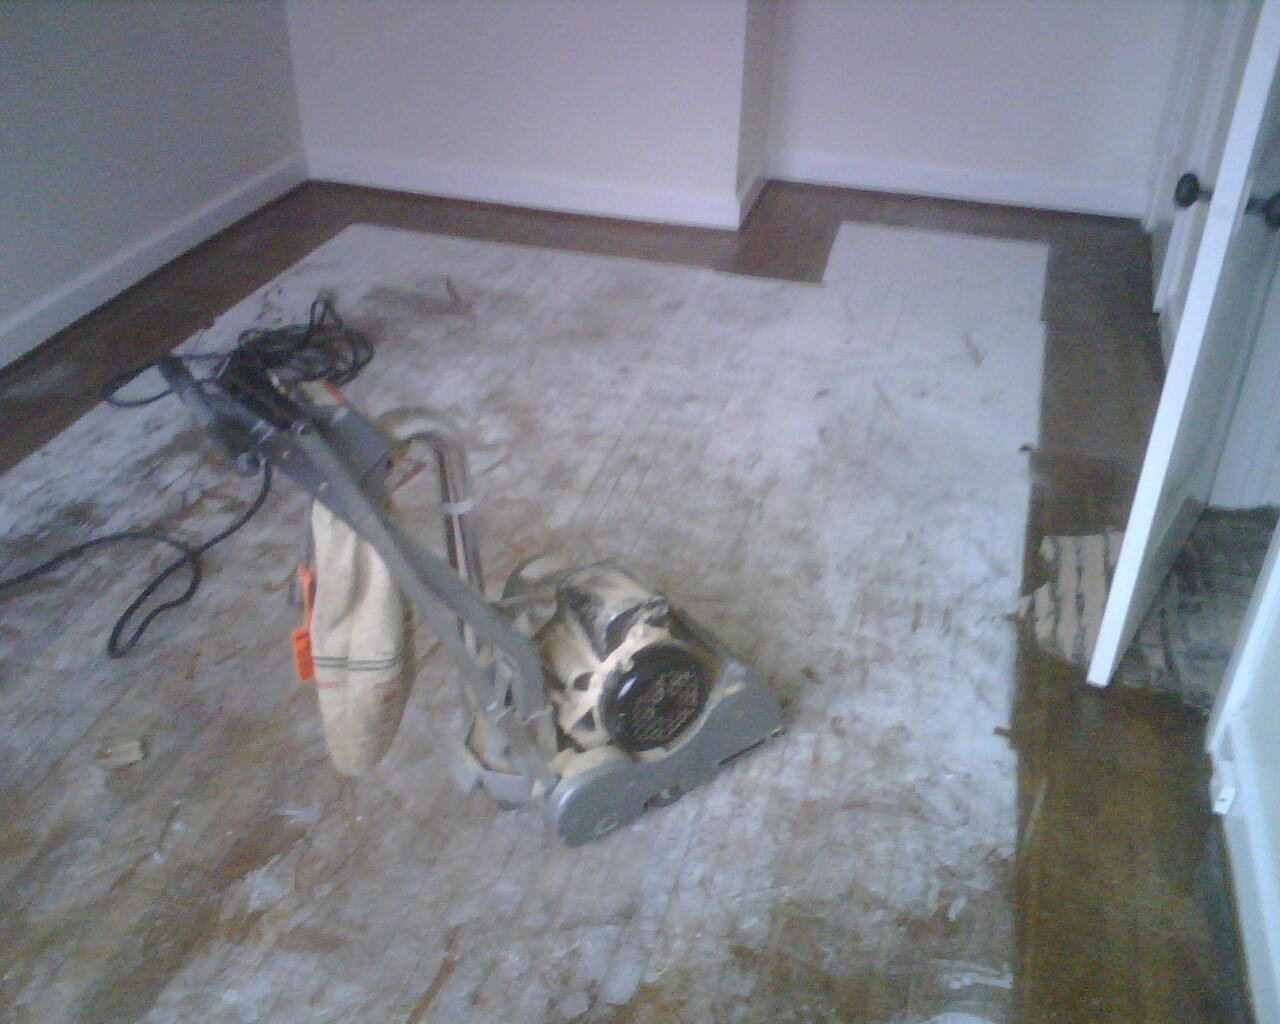 Overspray on hardwood floor